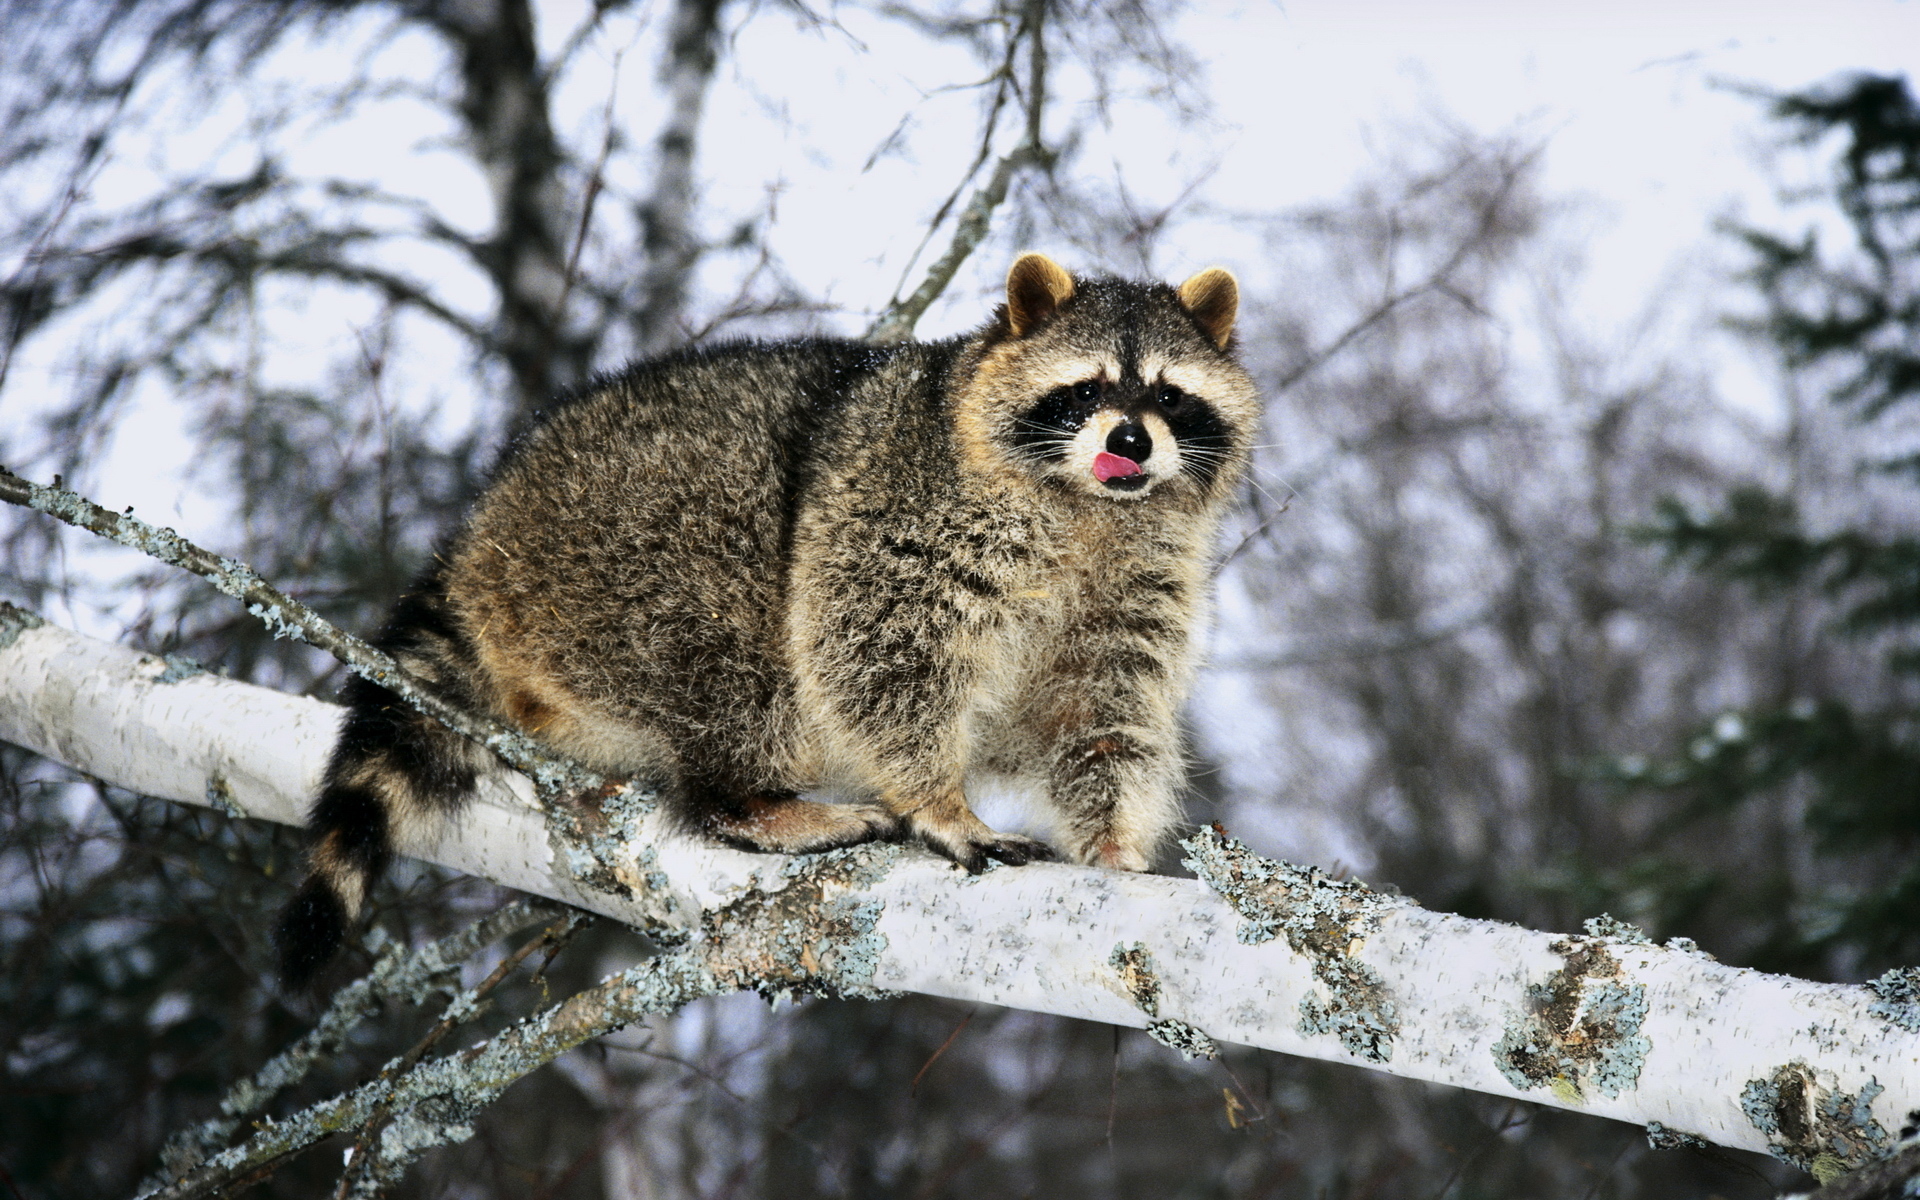 raccoon on tree, animal, fur, branch, winter, енот на дереве, животное, мех, ветка, зима,